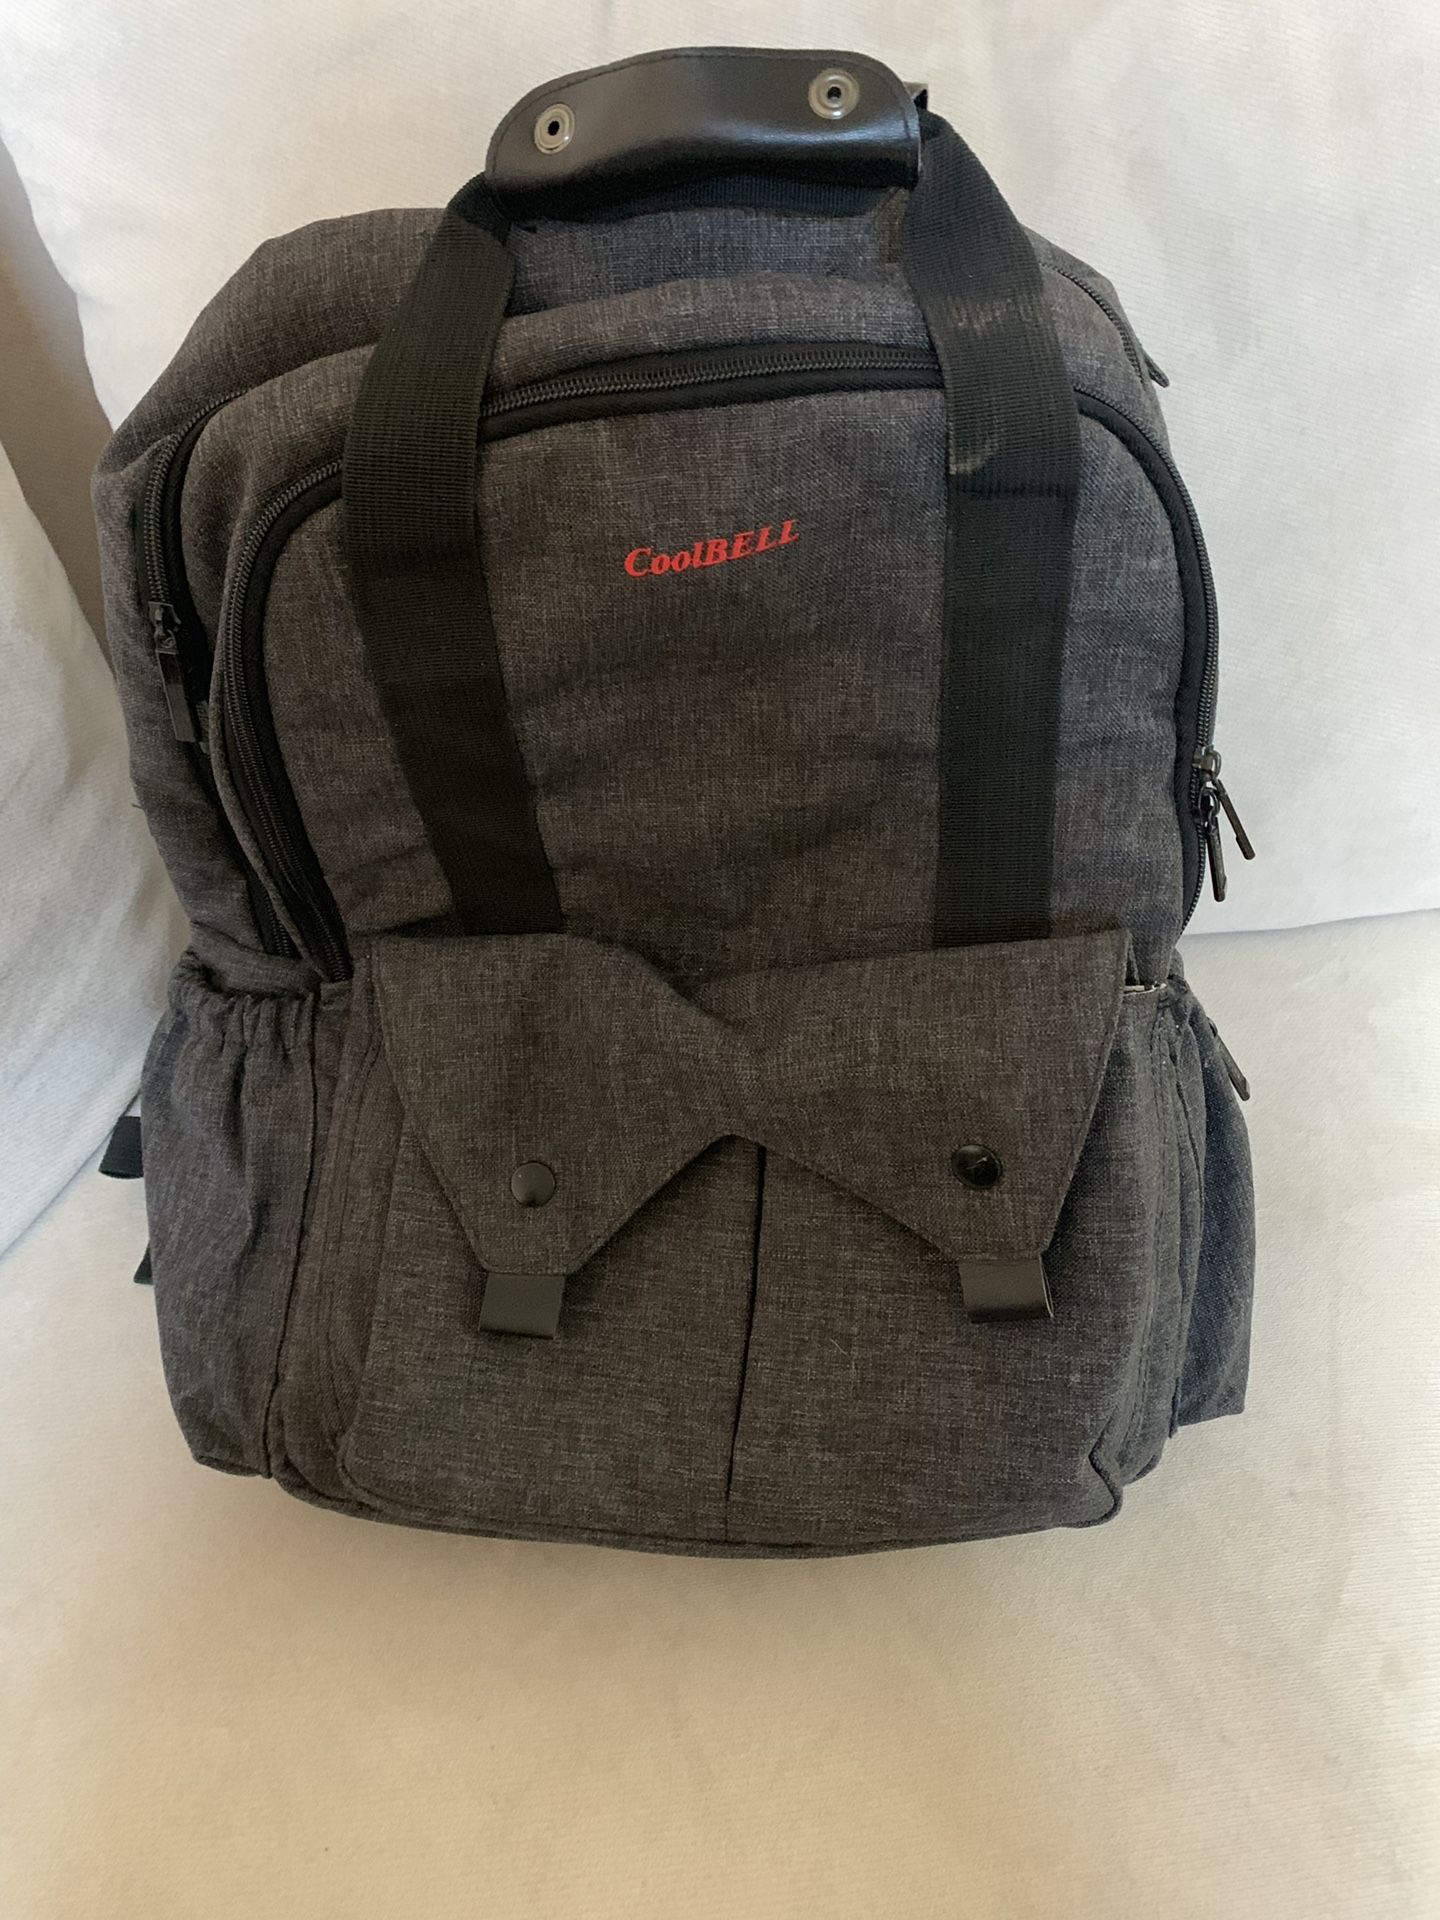 Diaper backpack